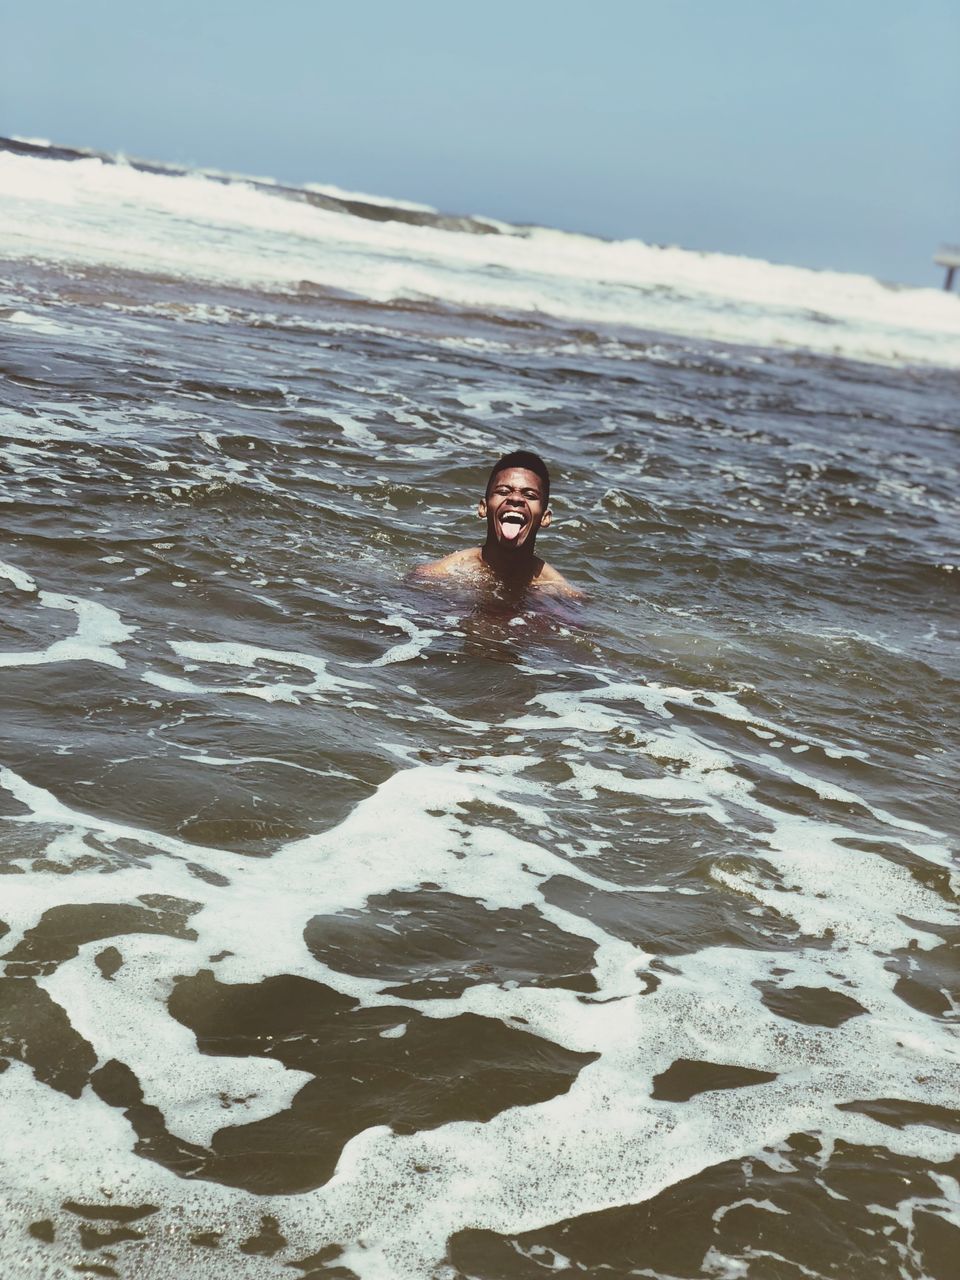 PORTRAIT OF SMILING MAN ON BEACH